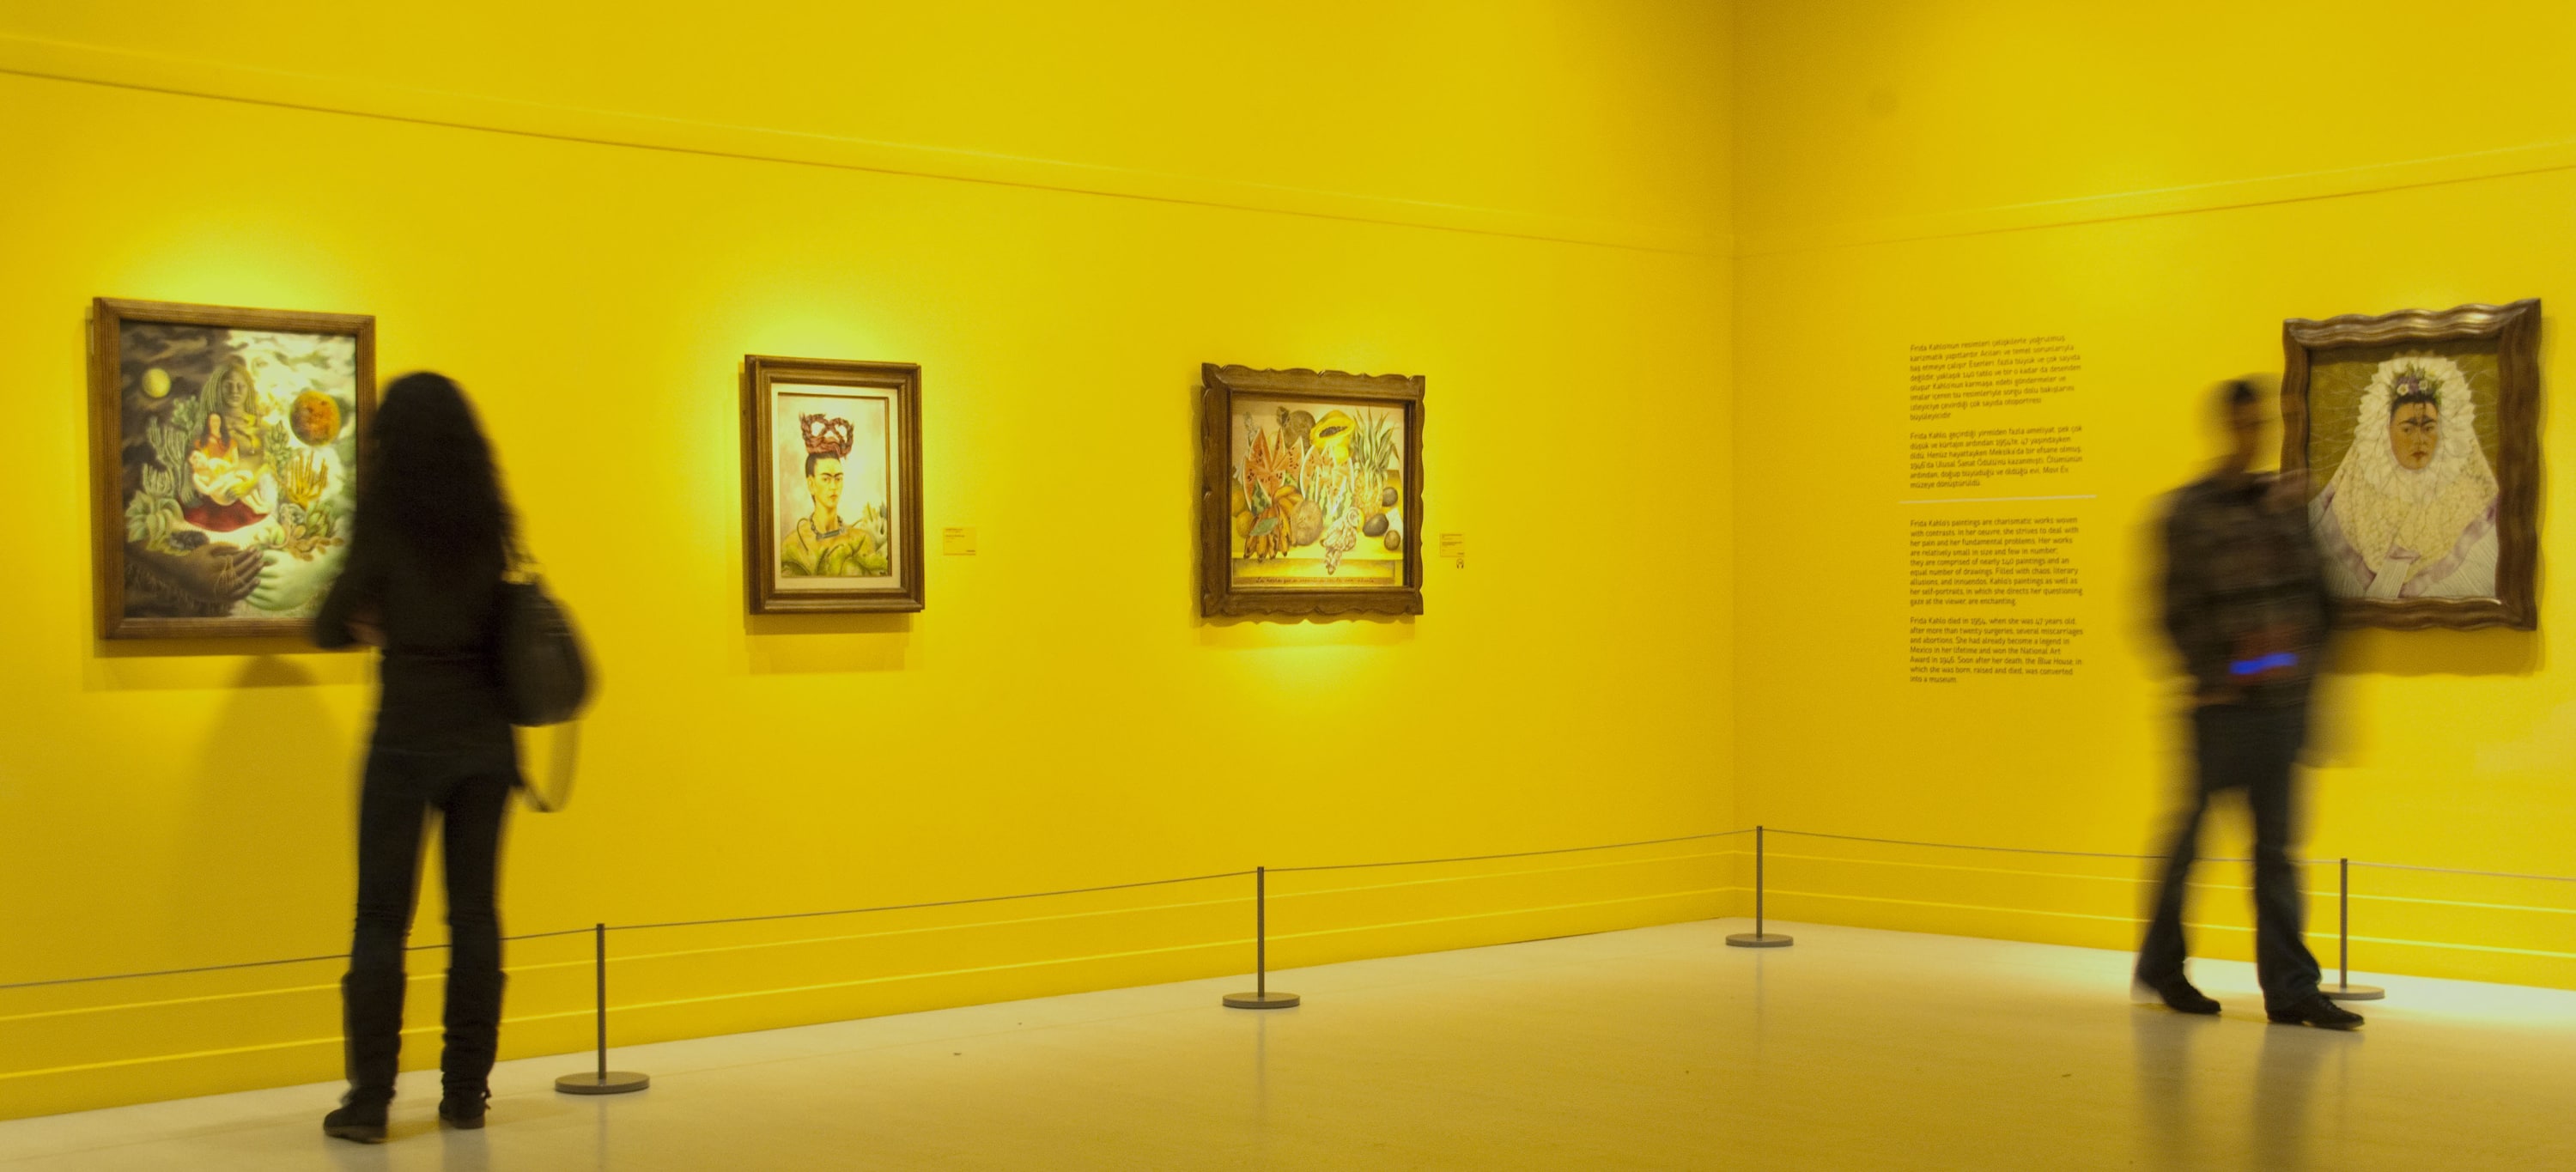 Frida Kahlo ve Diego Rivera galeri 15